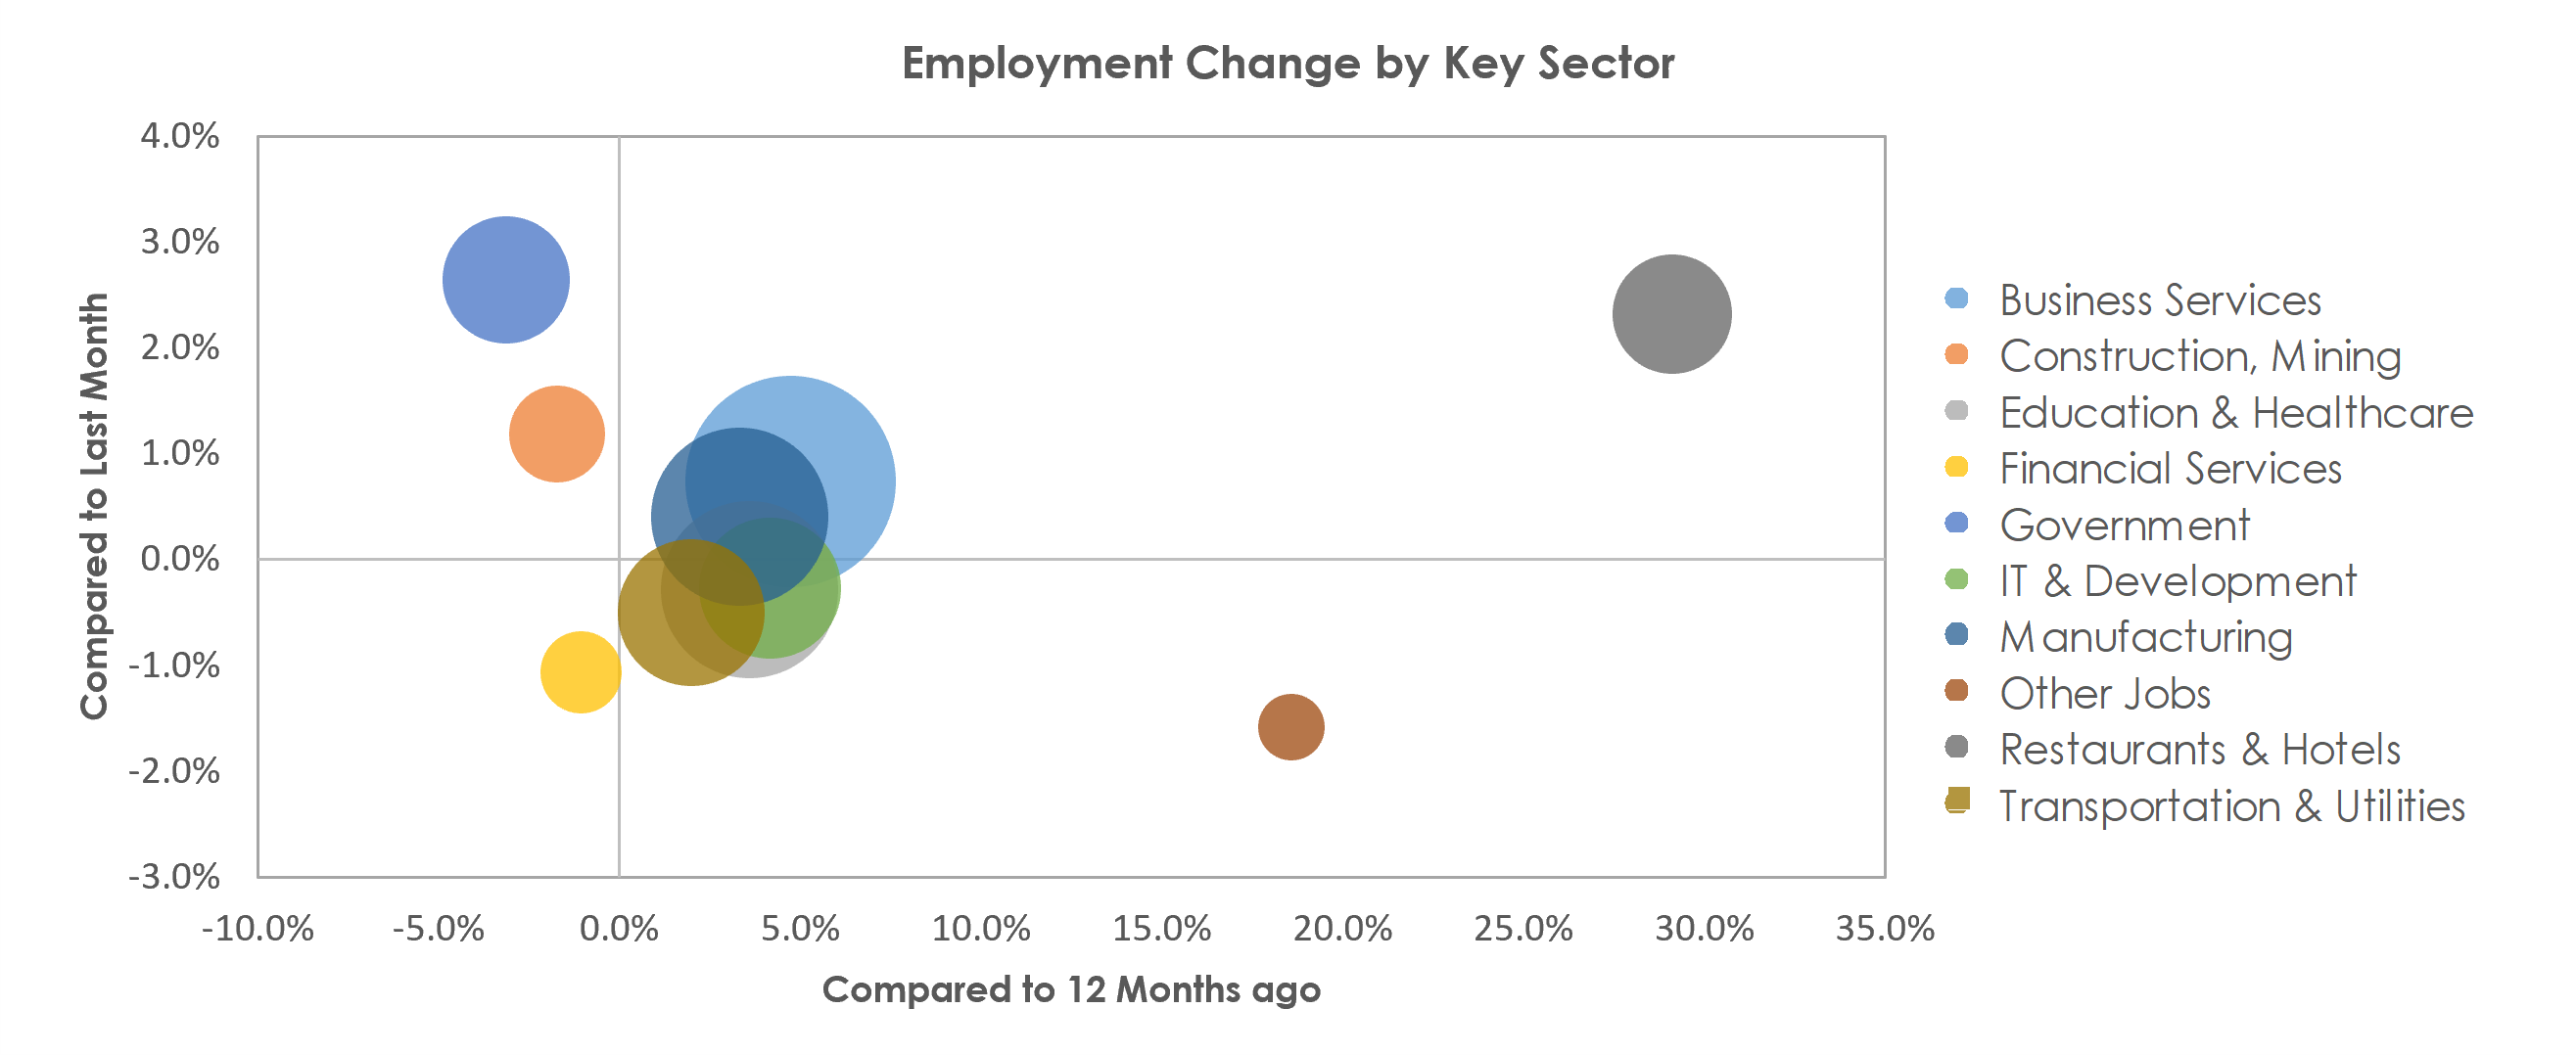 San Jose-Sunnyvale-Santa Clara, CA Unemployment by Industry September 2021